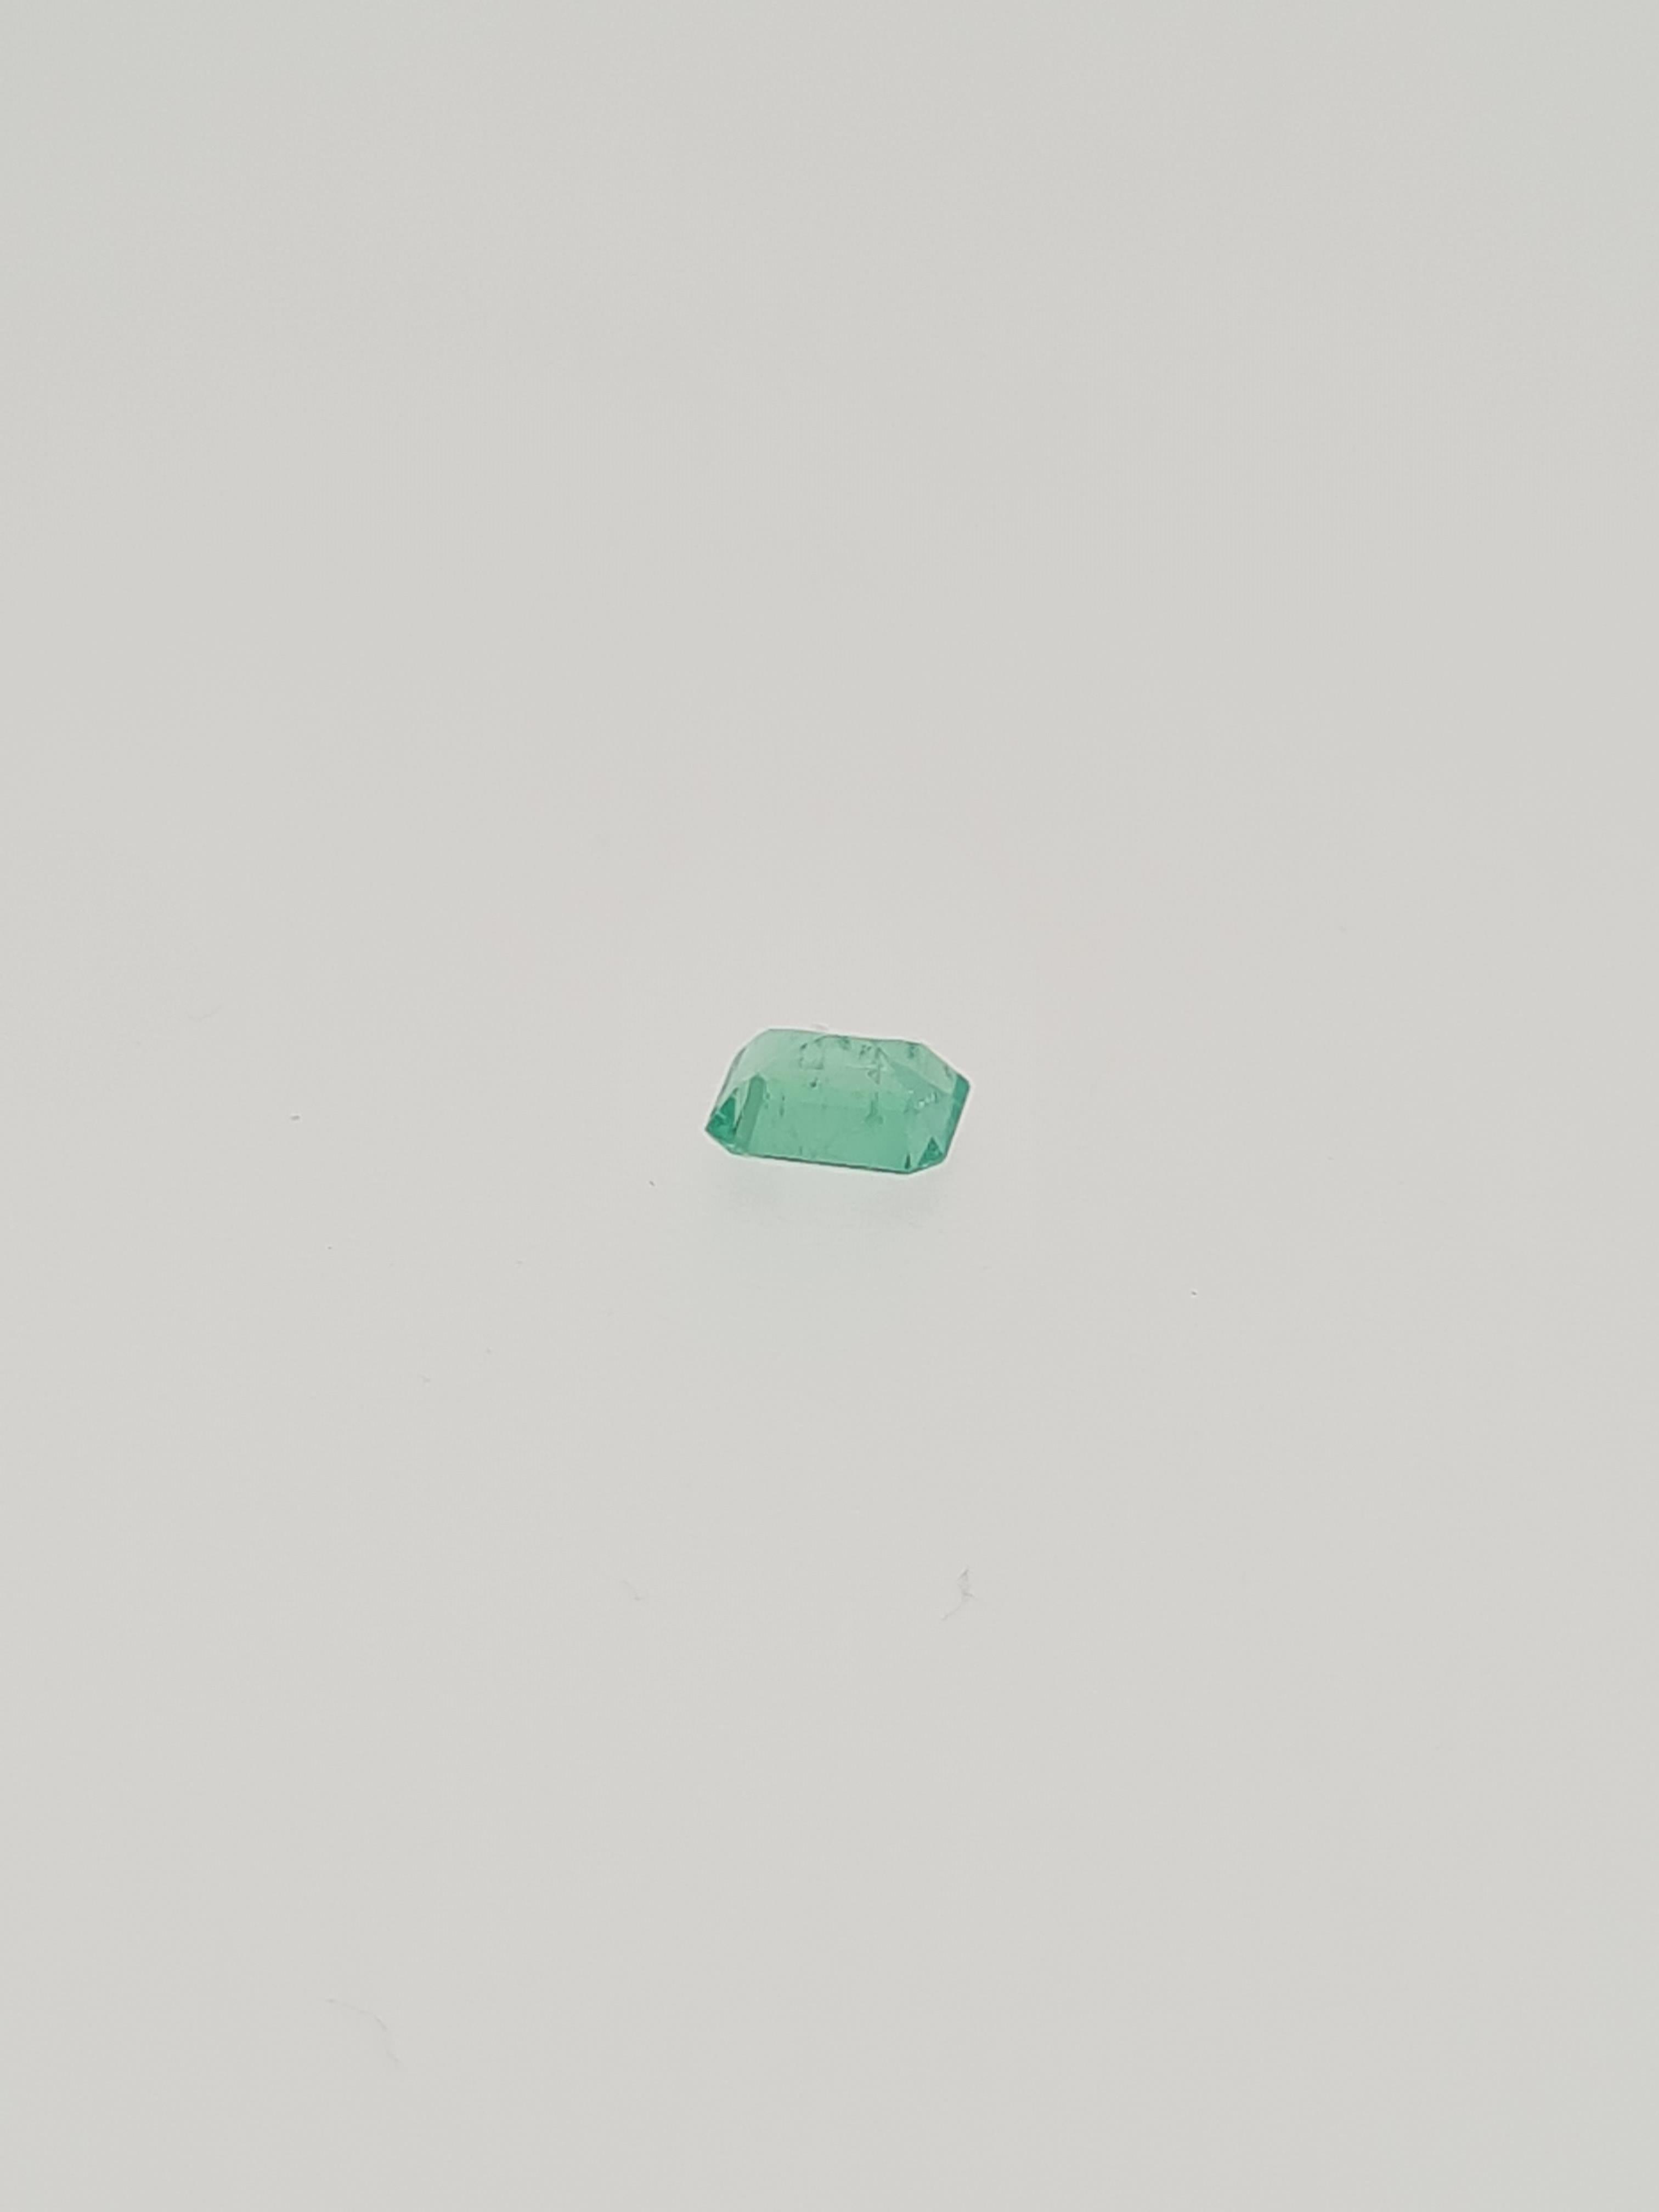 Emerald step cut gem stone - Image 3 of 5